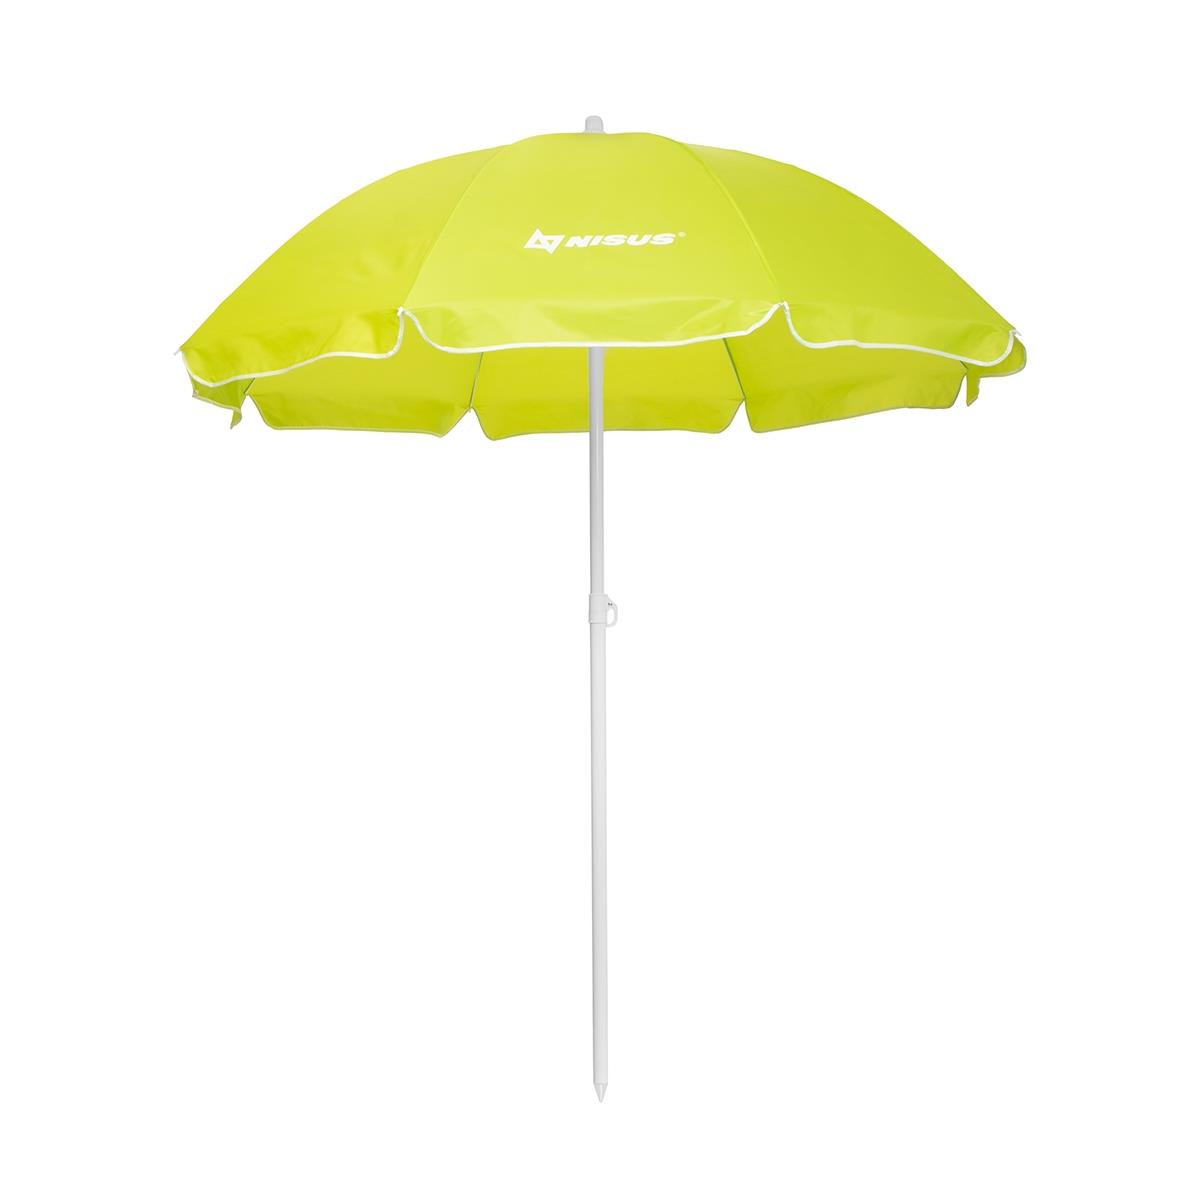 Зонт пляжный d 2,4м прямой (28/32/210D) NA-240-LG Nisus зонт пляжный d 2 00м с наклоном салатовый 28 32 210d na 200n lg nisus